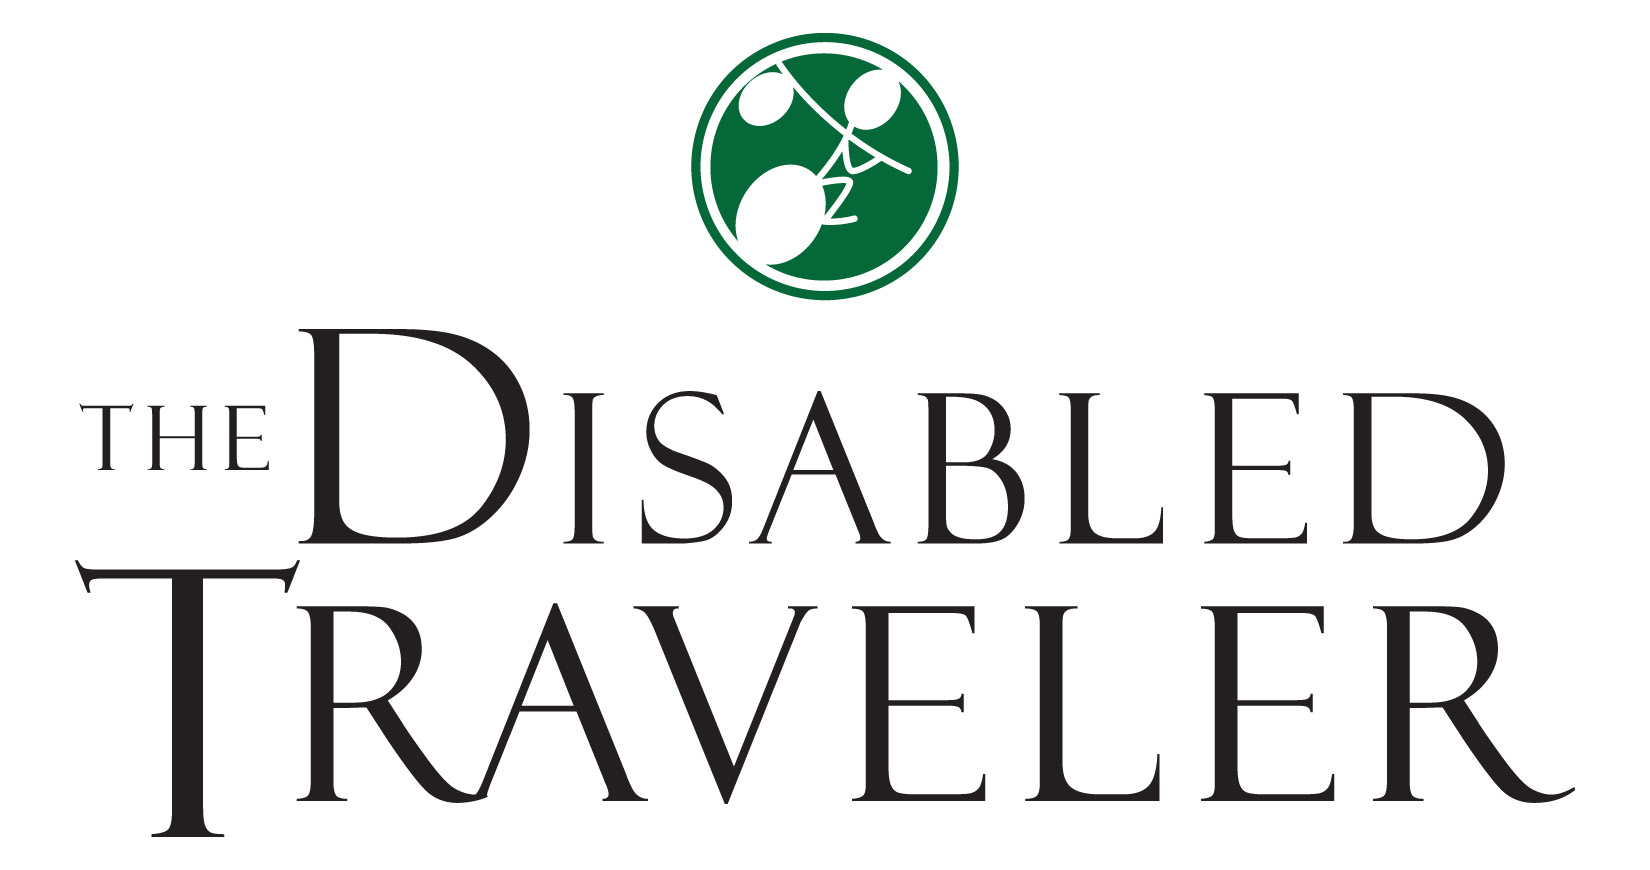 The Disabled Traveler